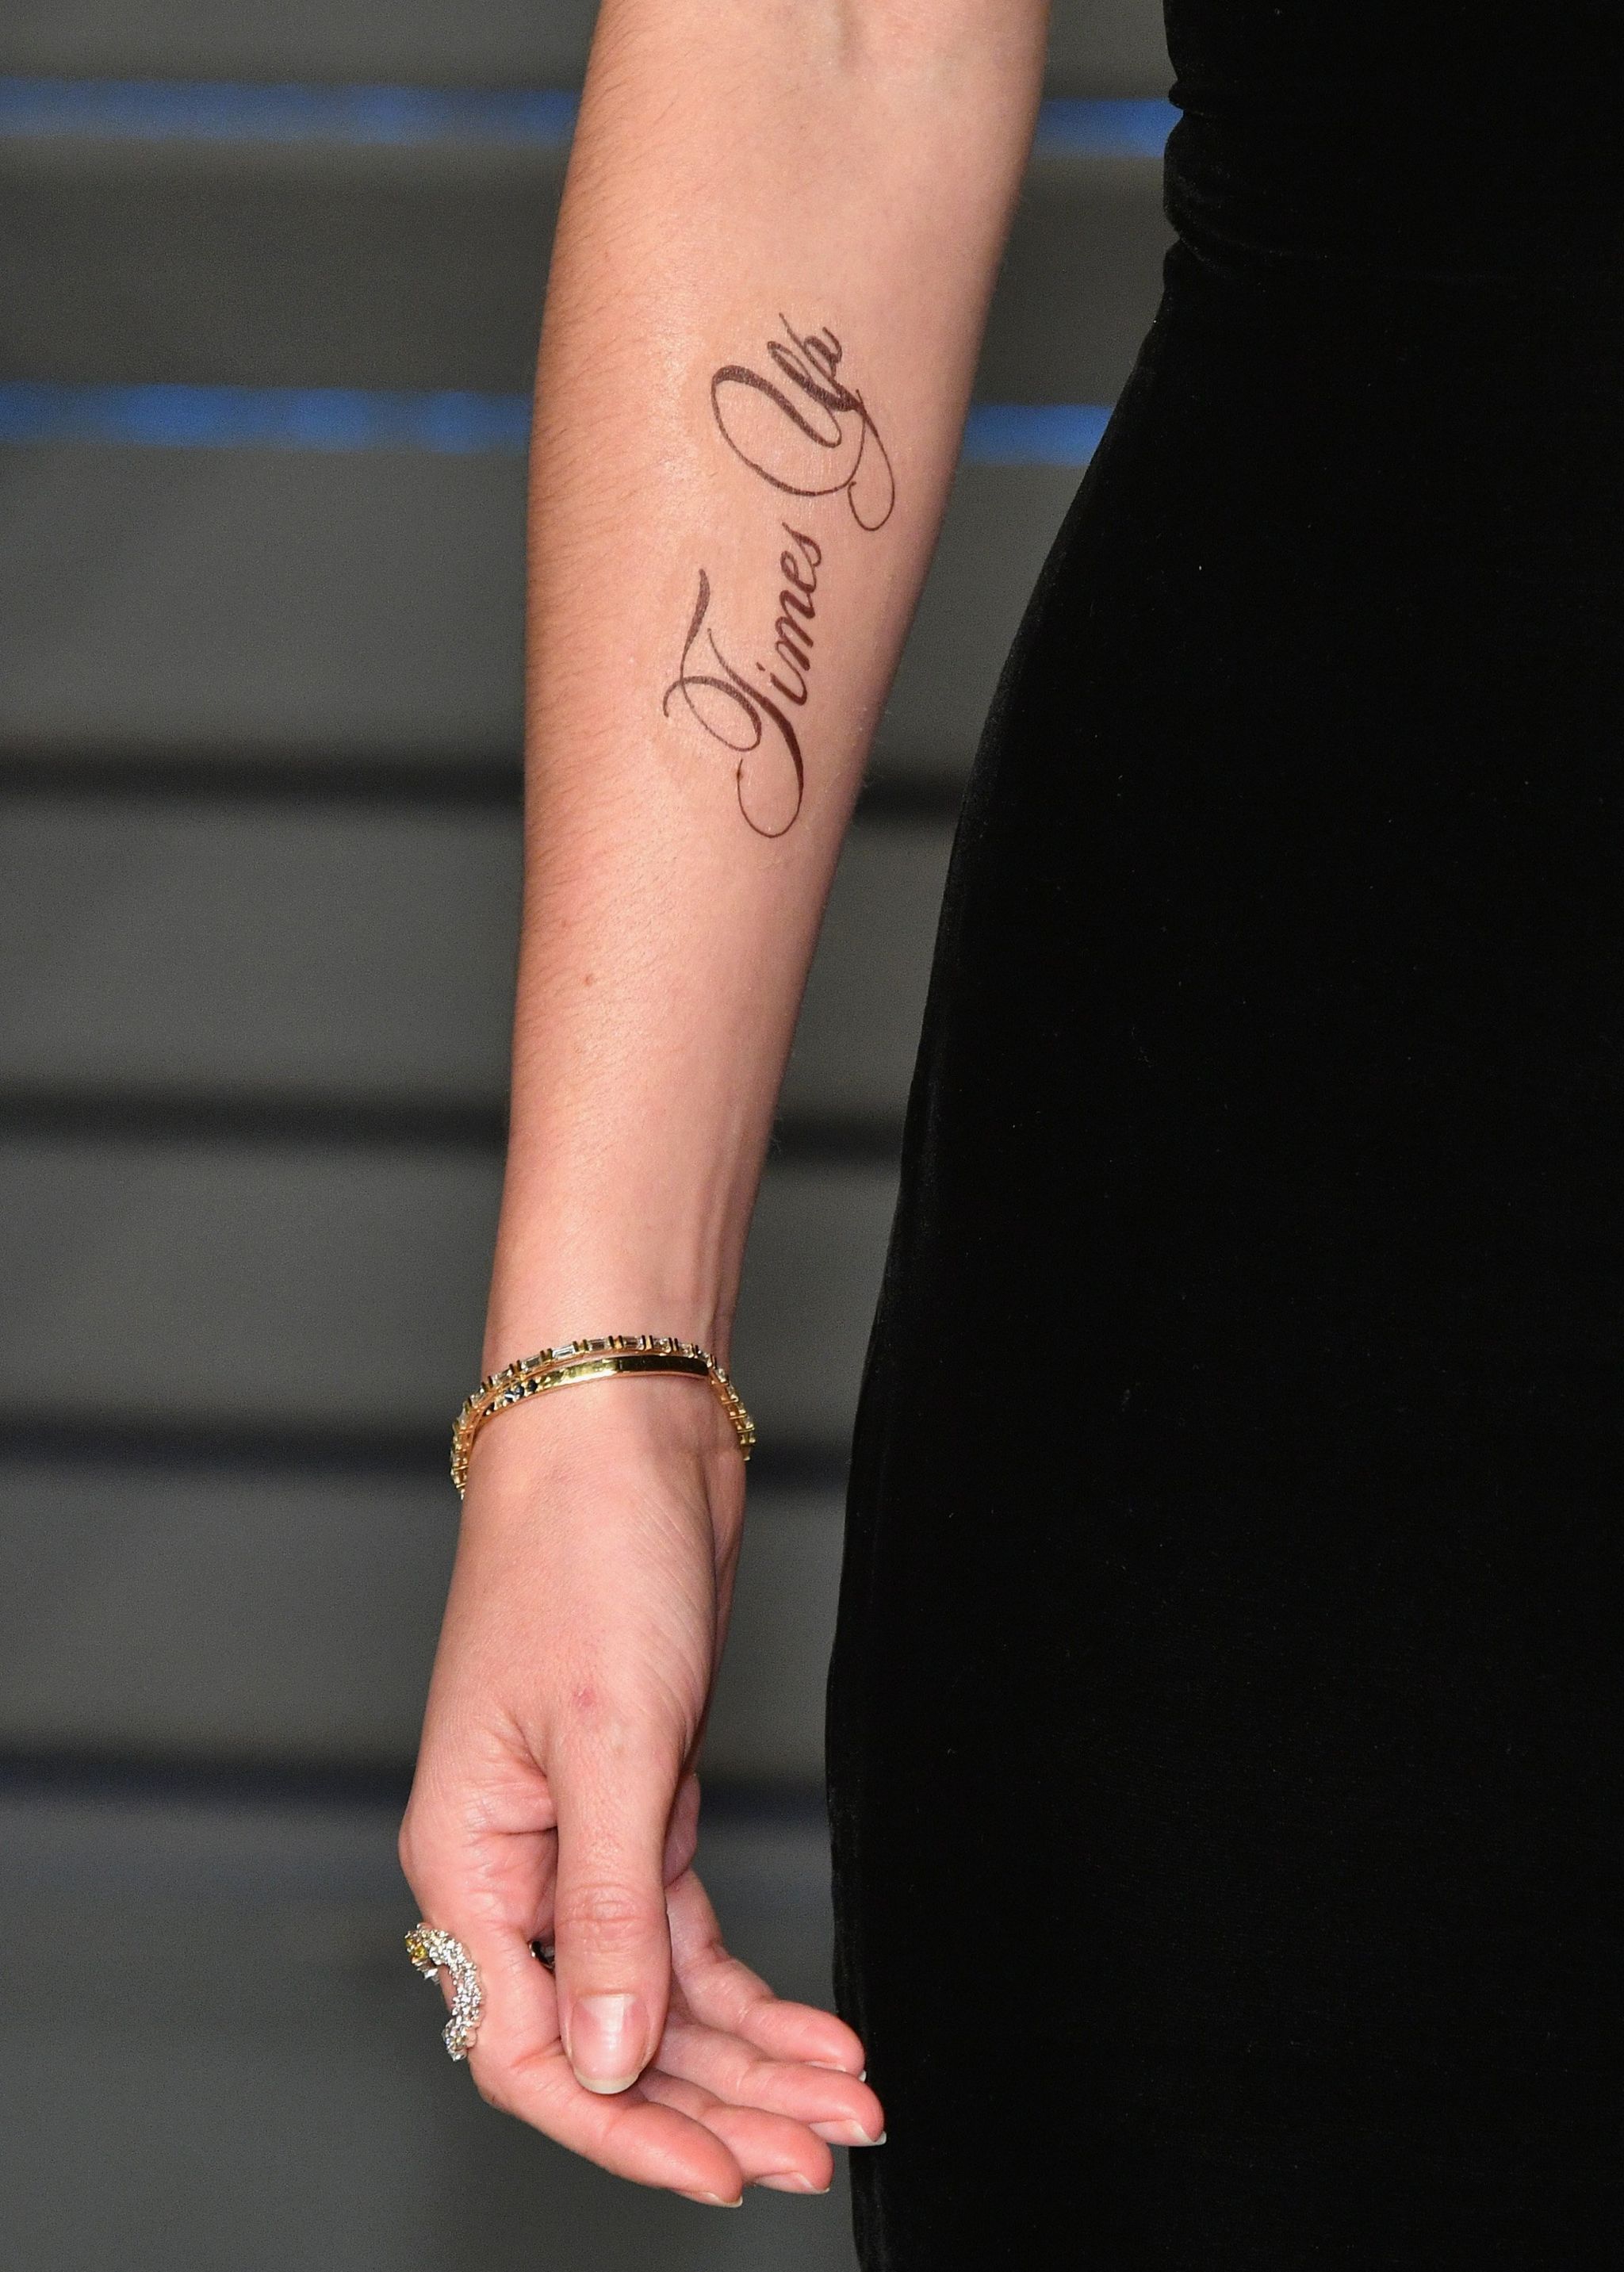 Emma Watson's tattoo